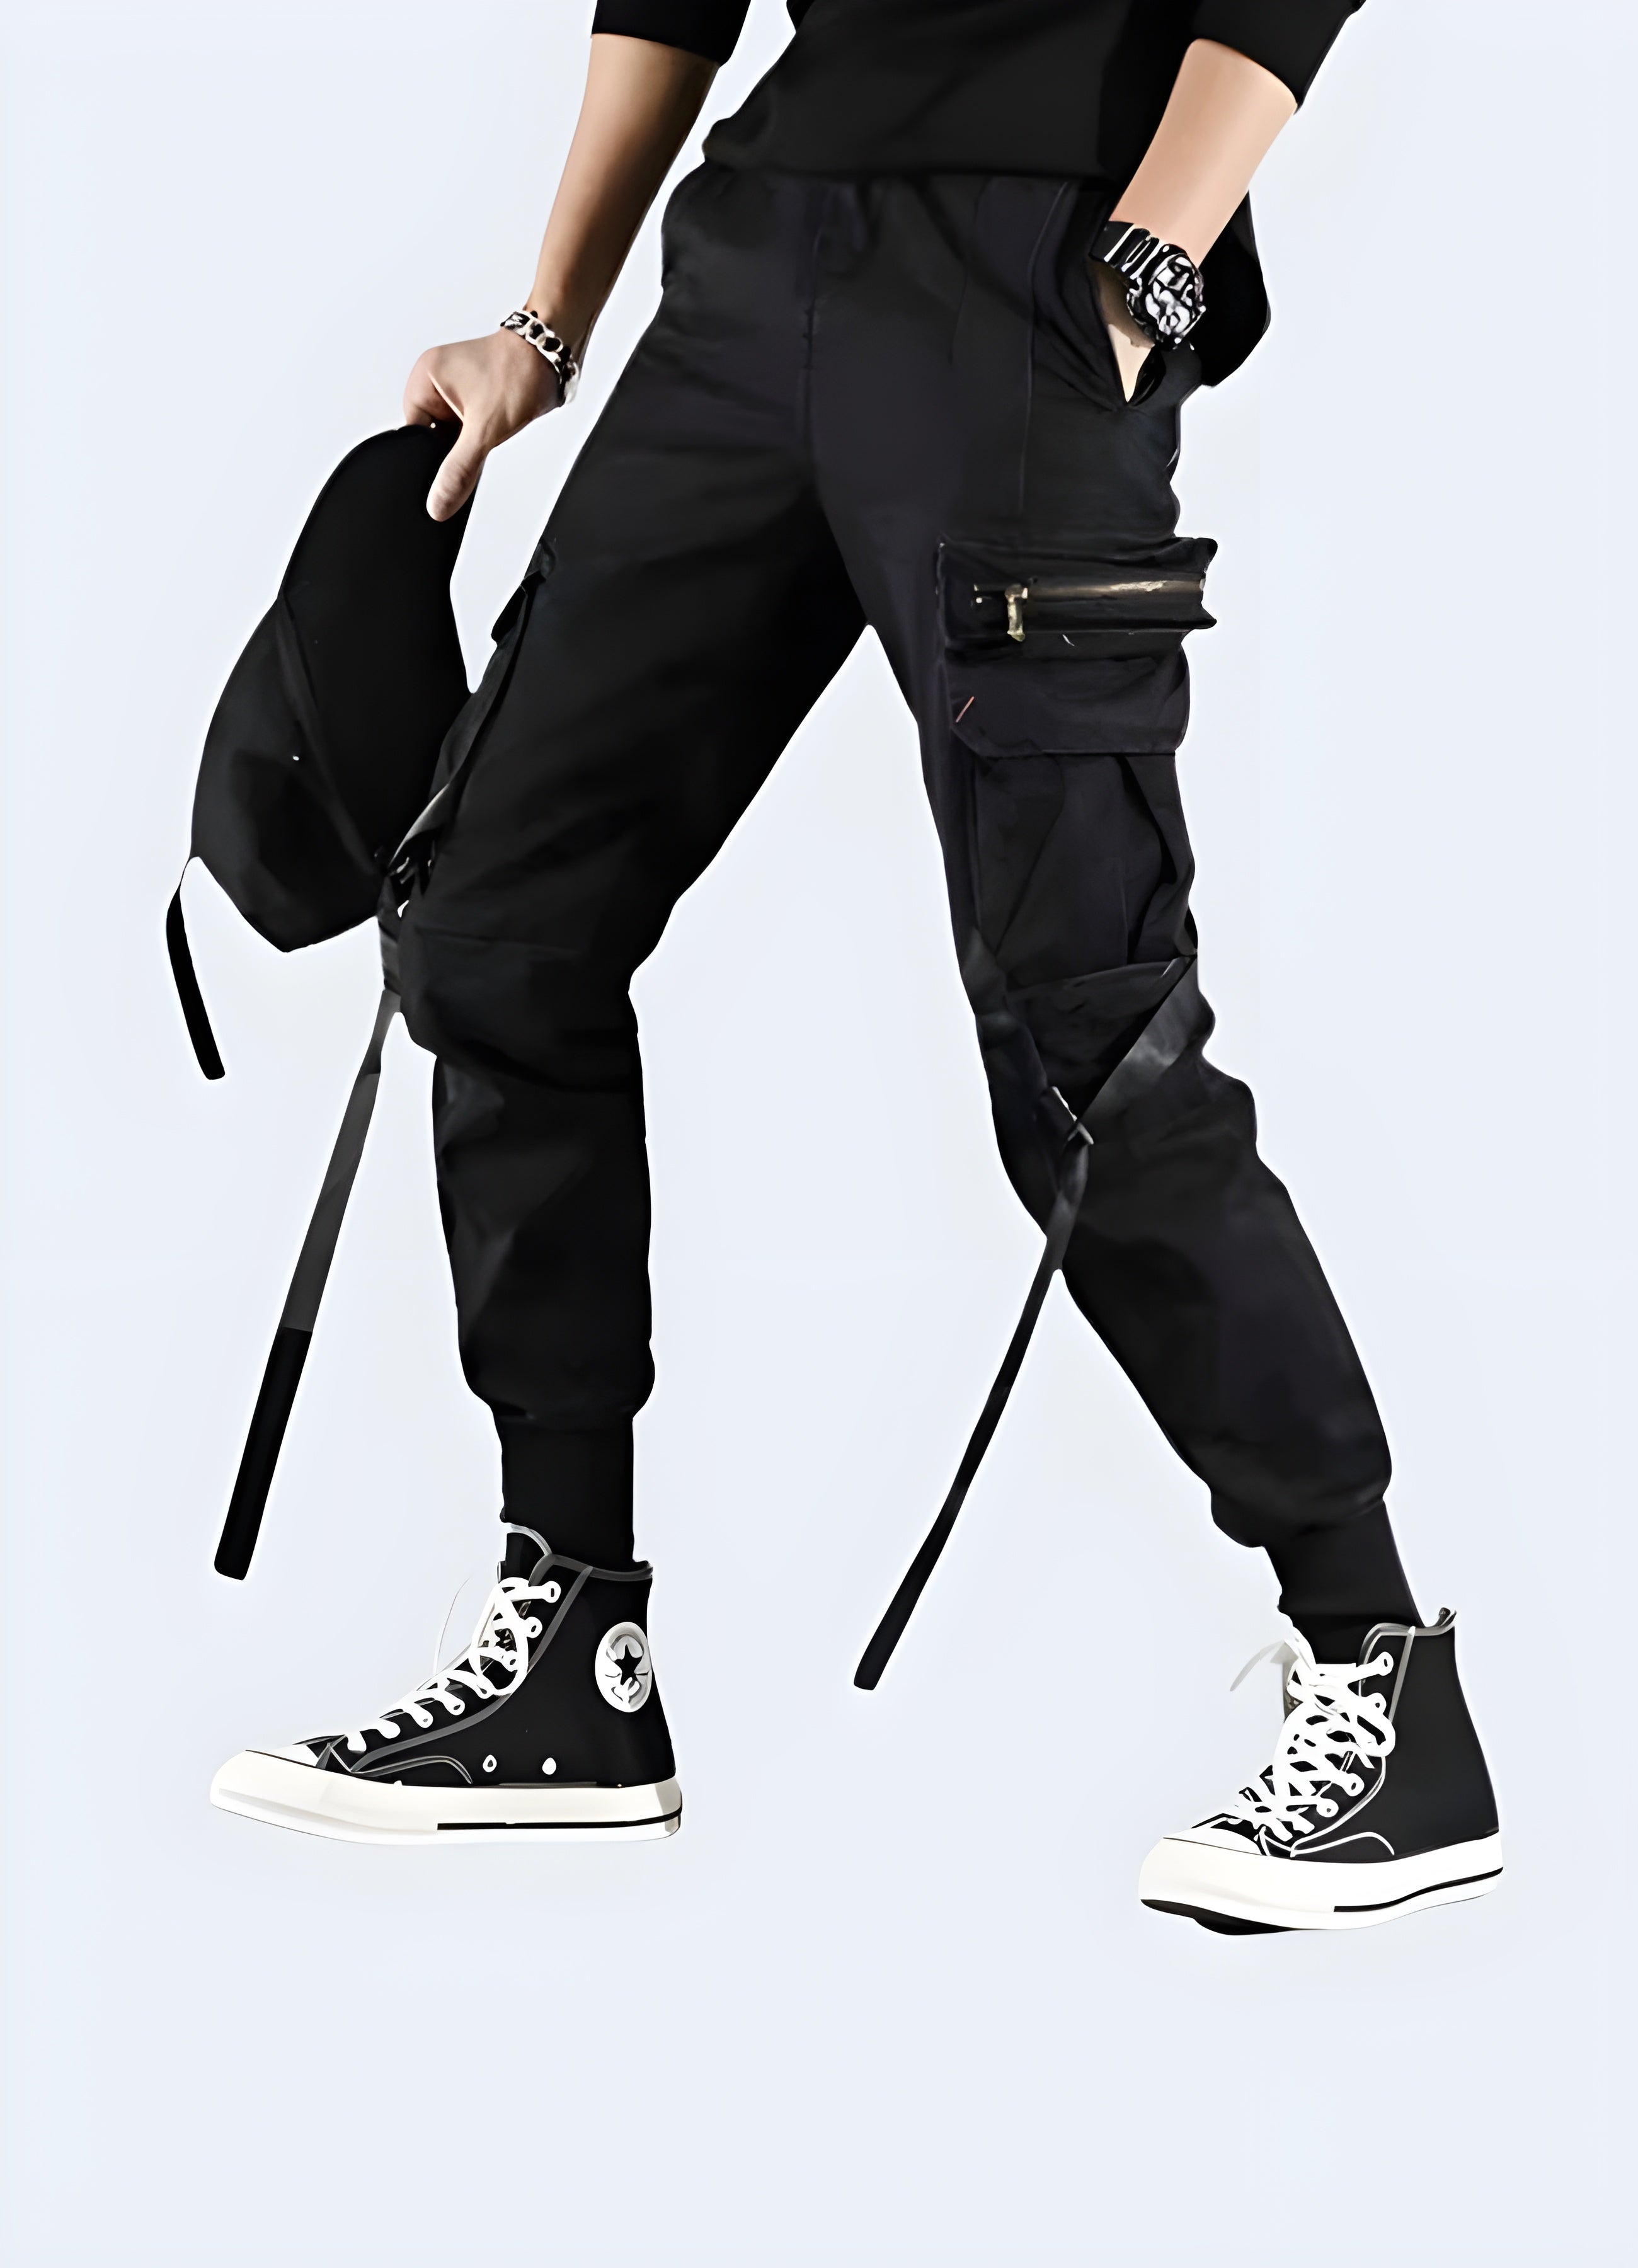 Urban Ninja Pants – Techwear Australia